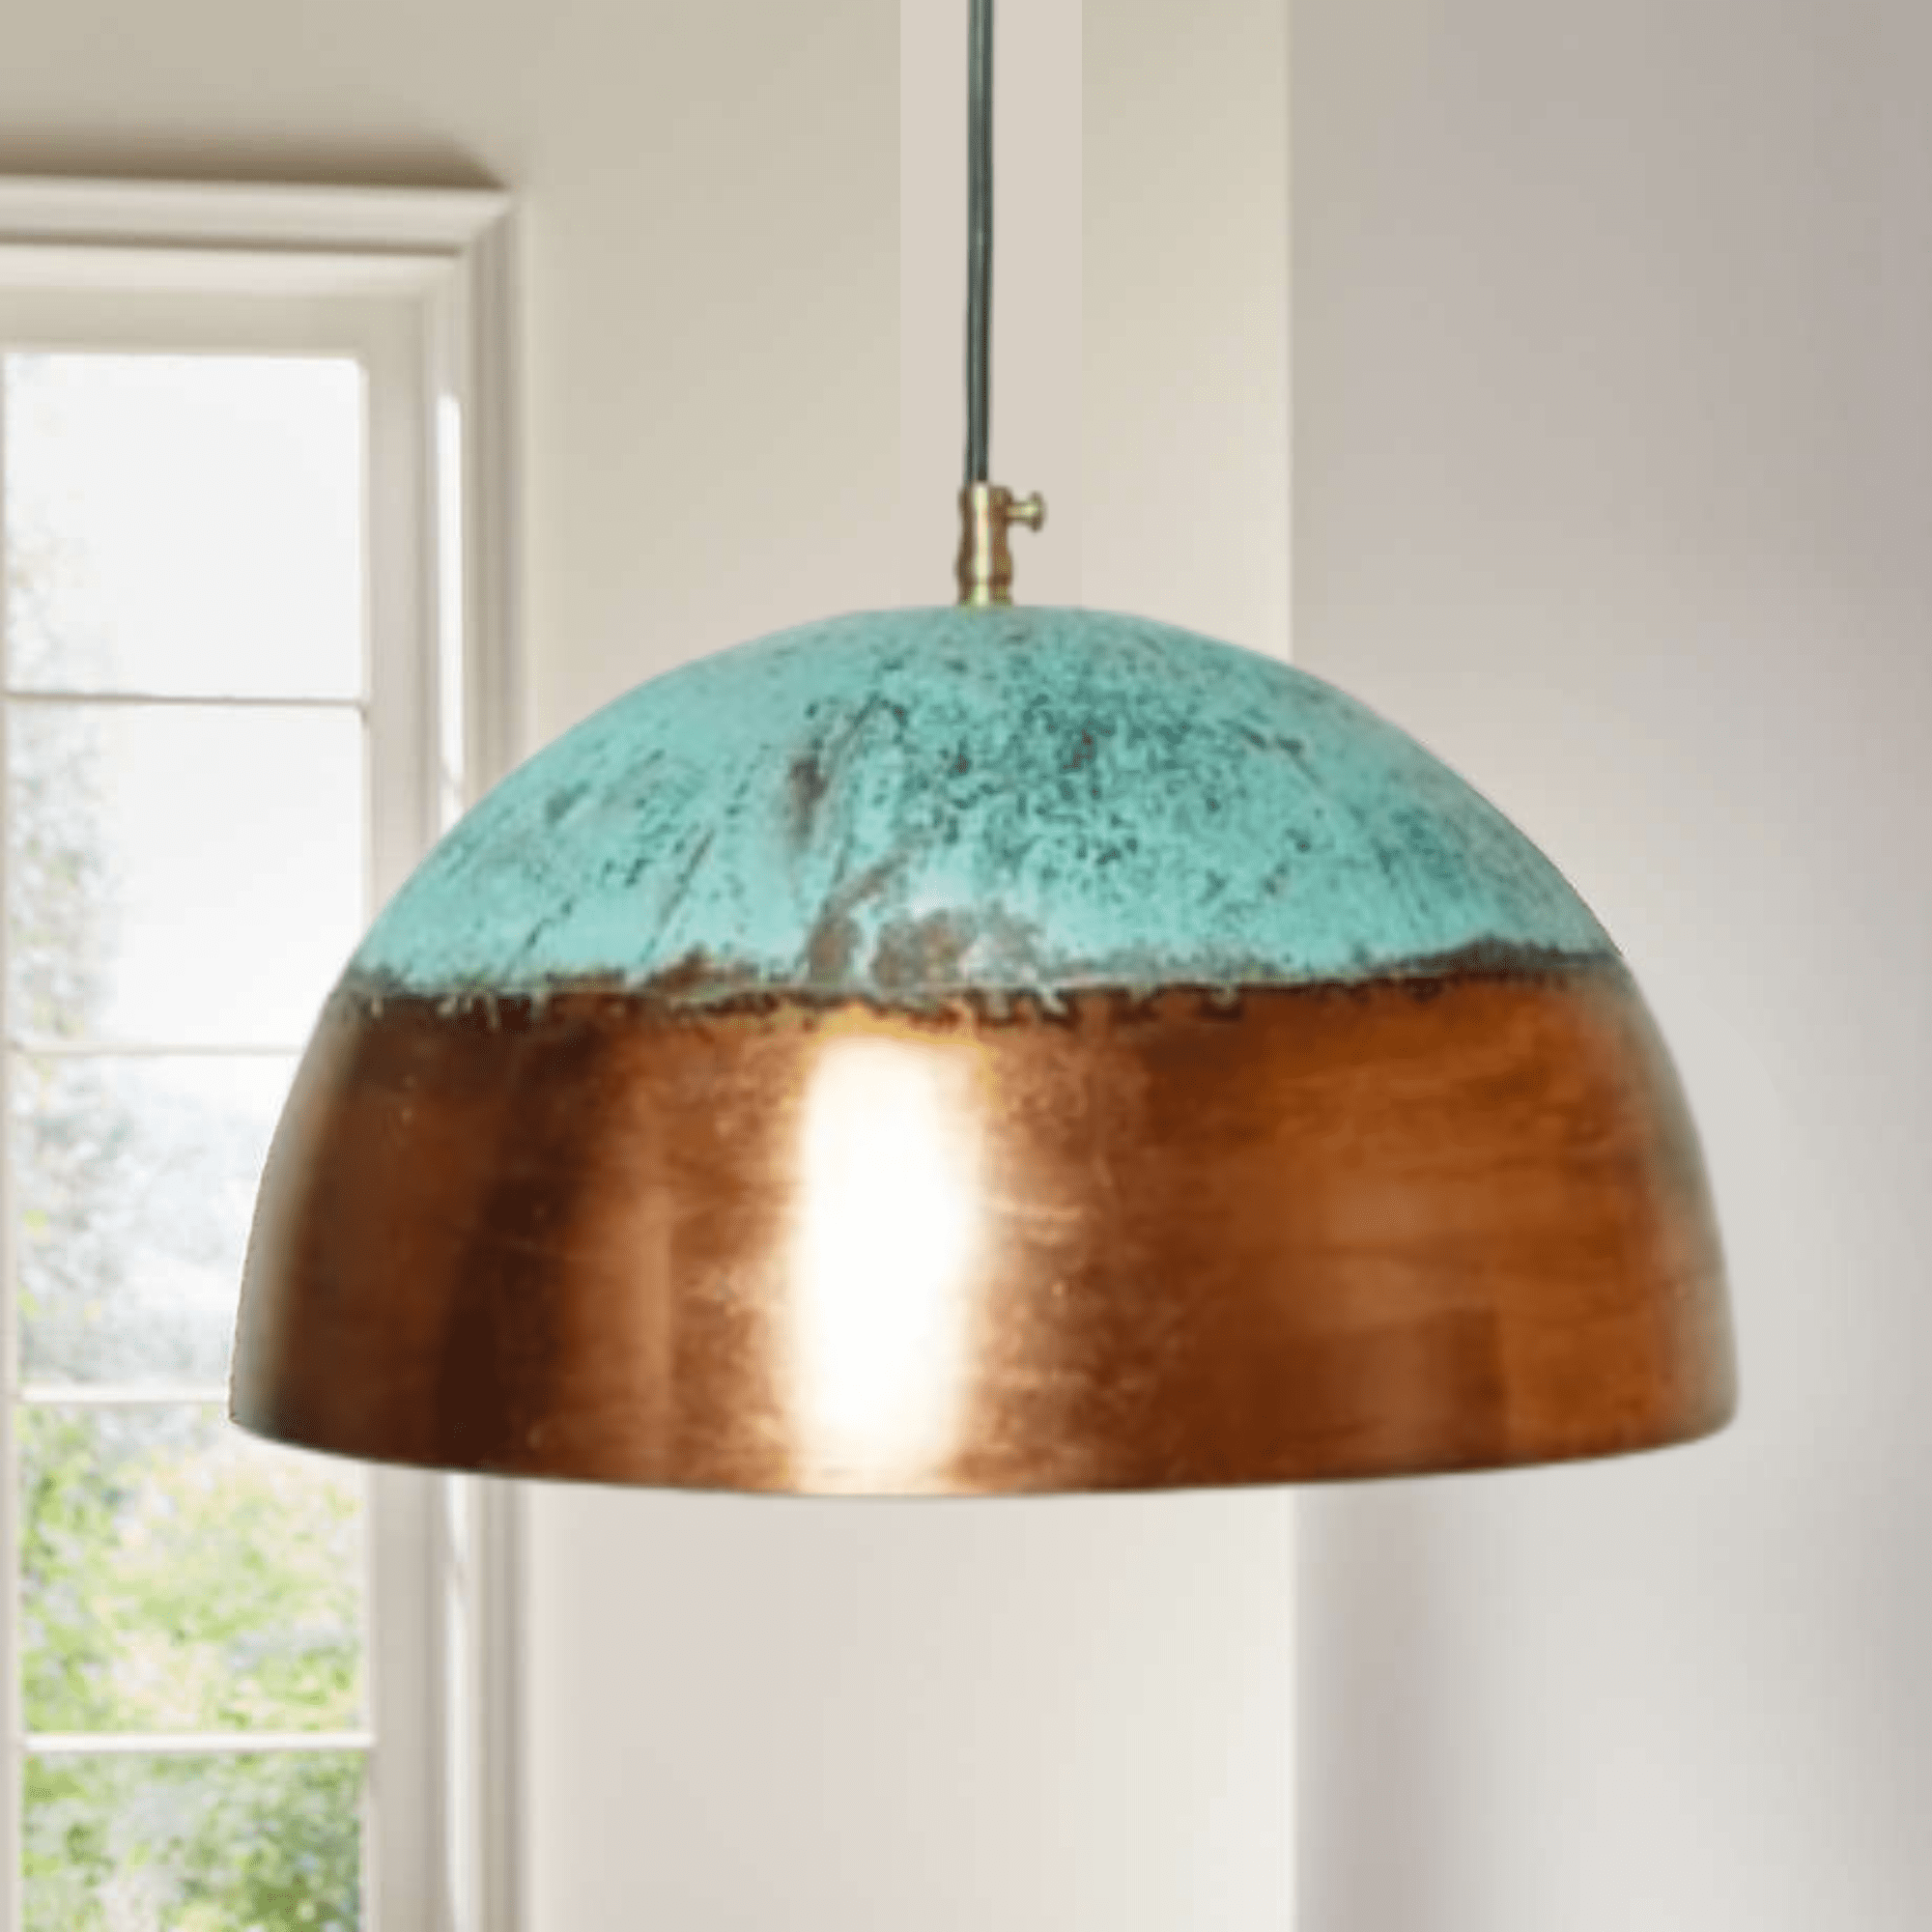 Green Patina Copper Pendant Light,  Oxidized Kitchen Lighting.